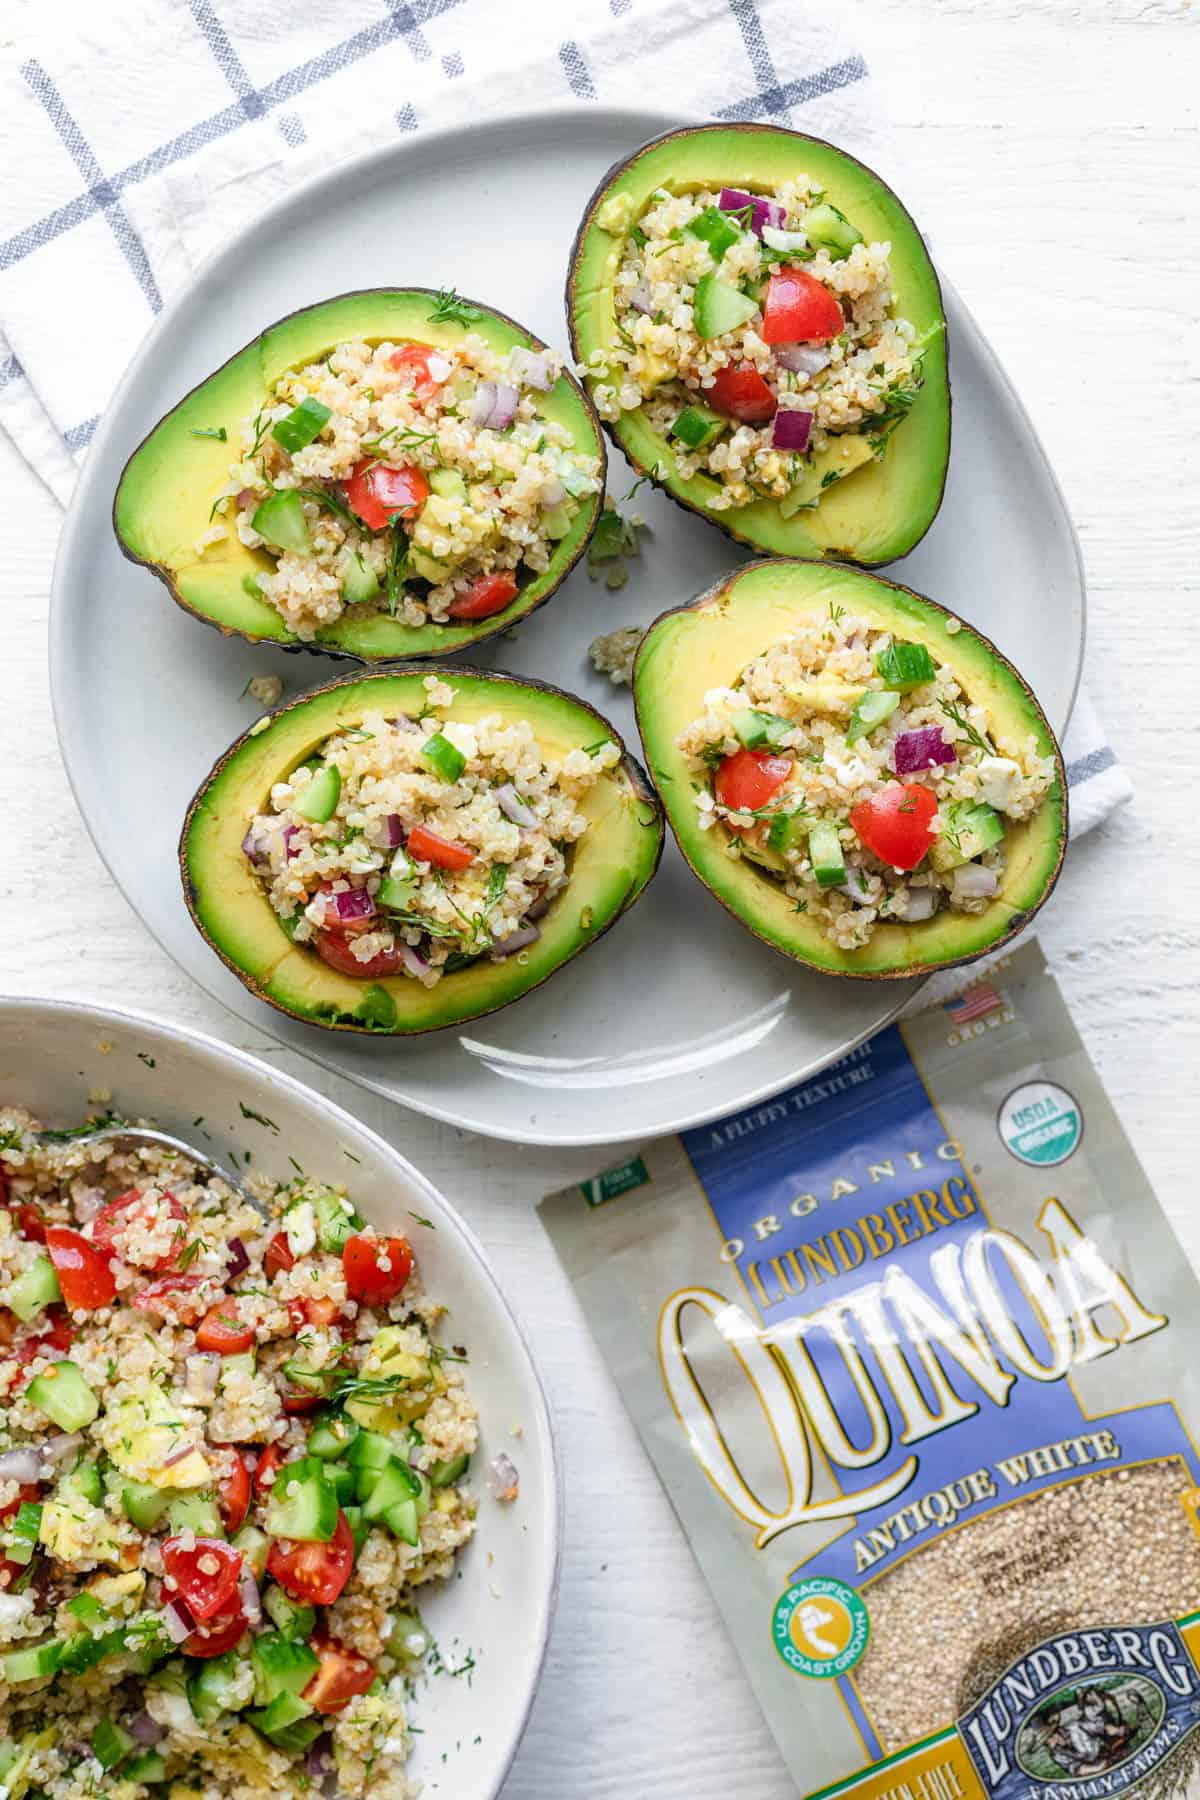 Avocado stuffed quinoa salad made with Lundberg quinoa